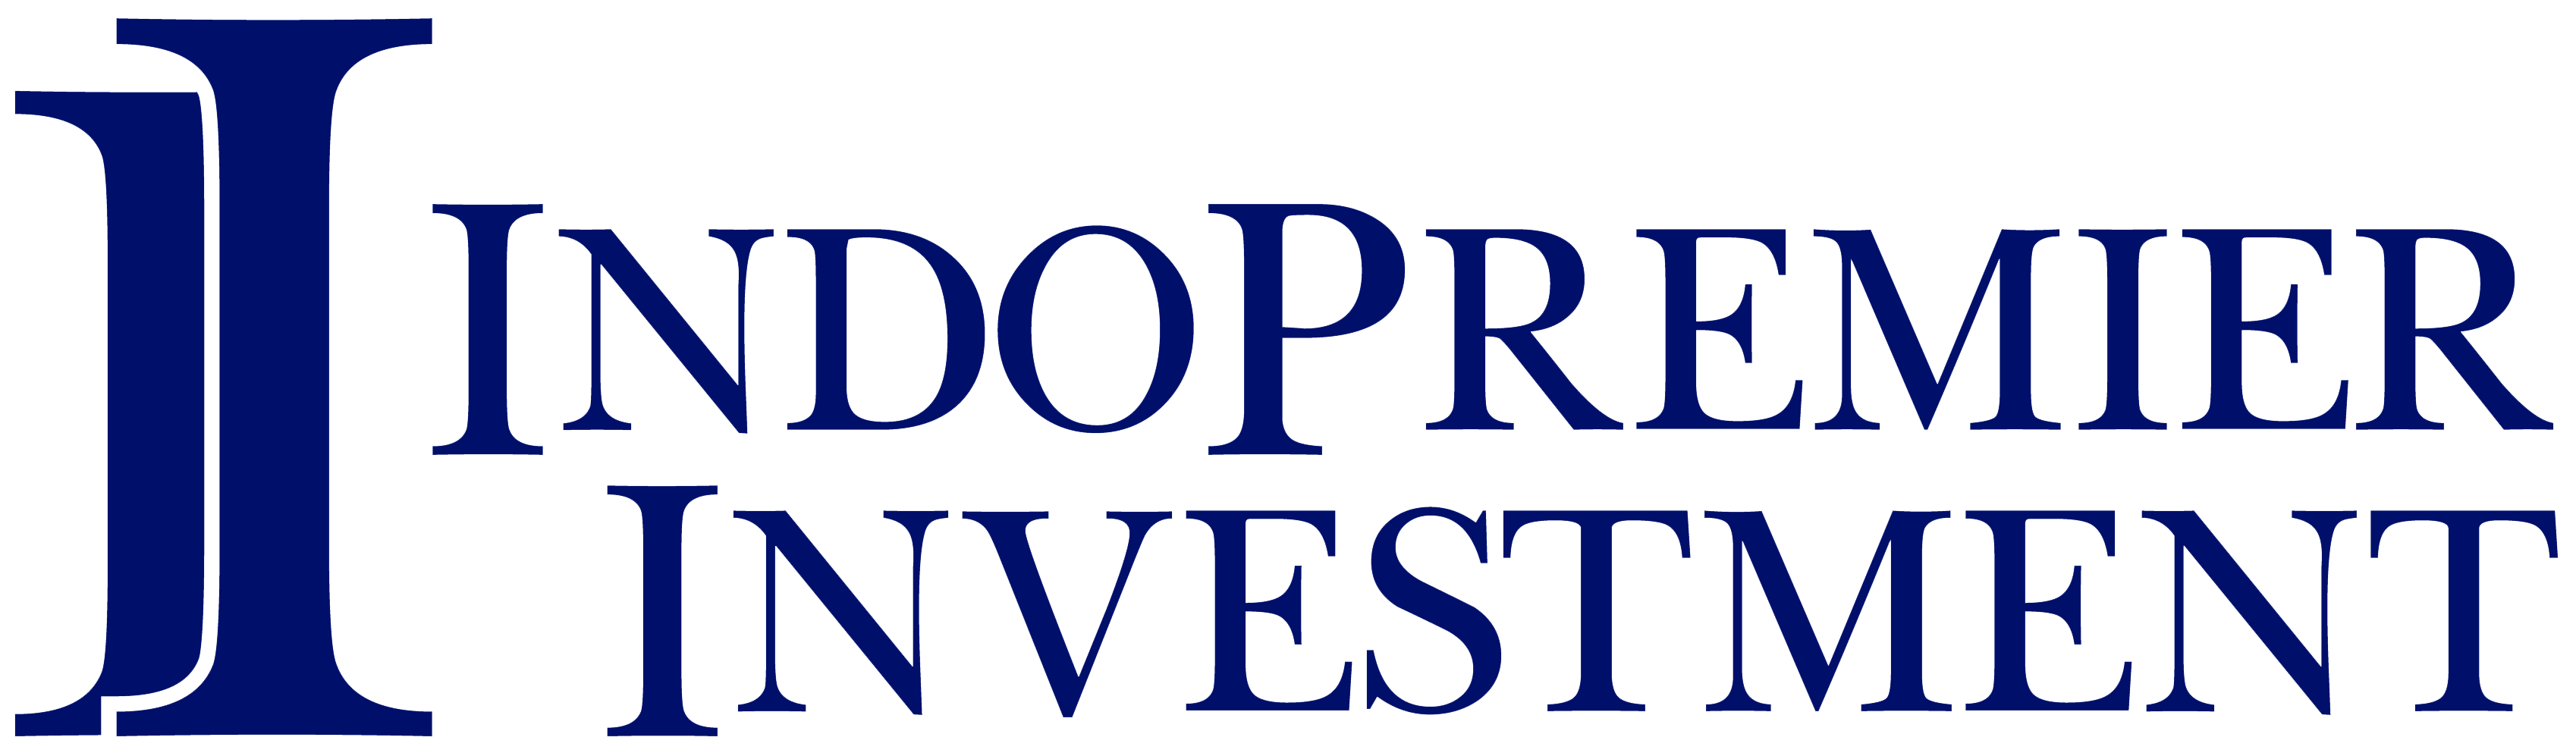 Logo for Indo Premier Investment Management